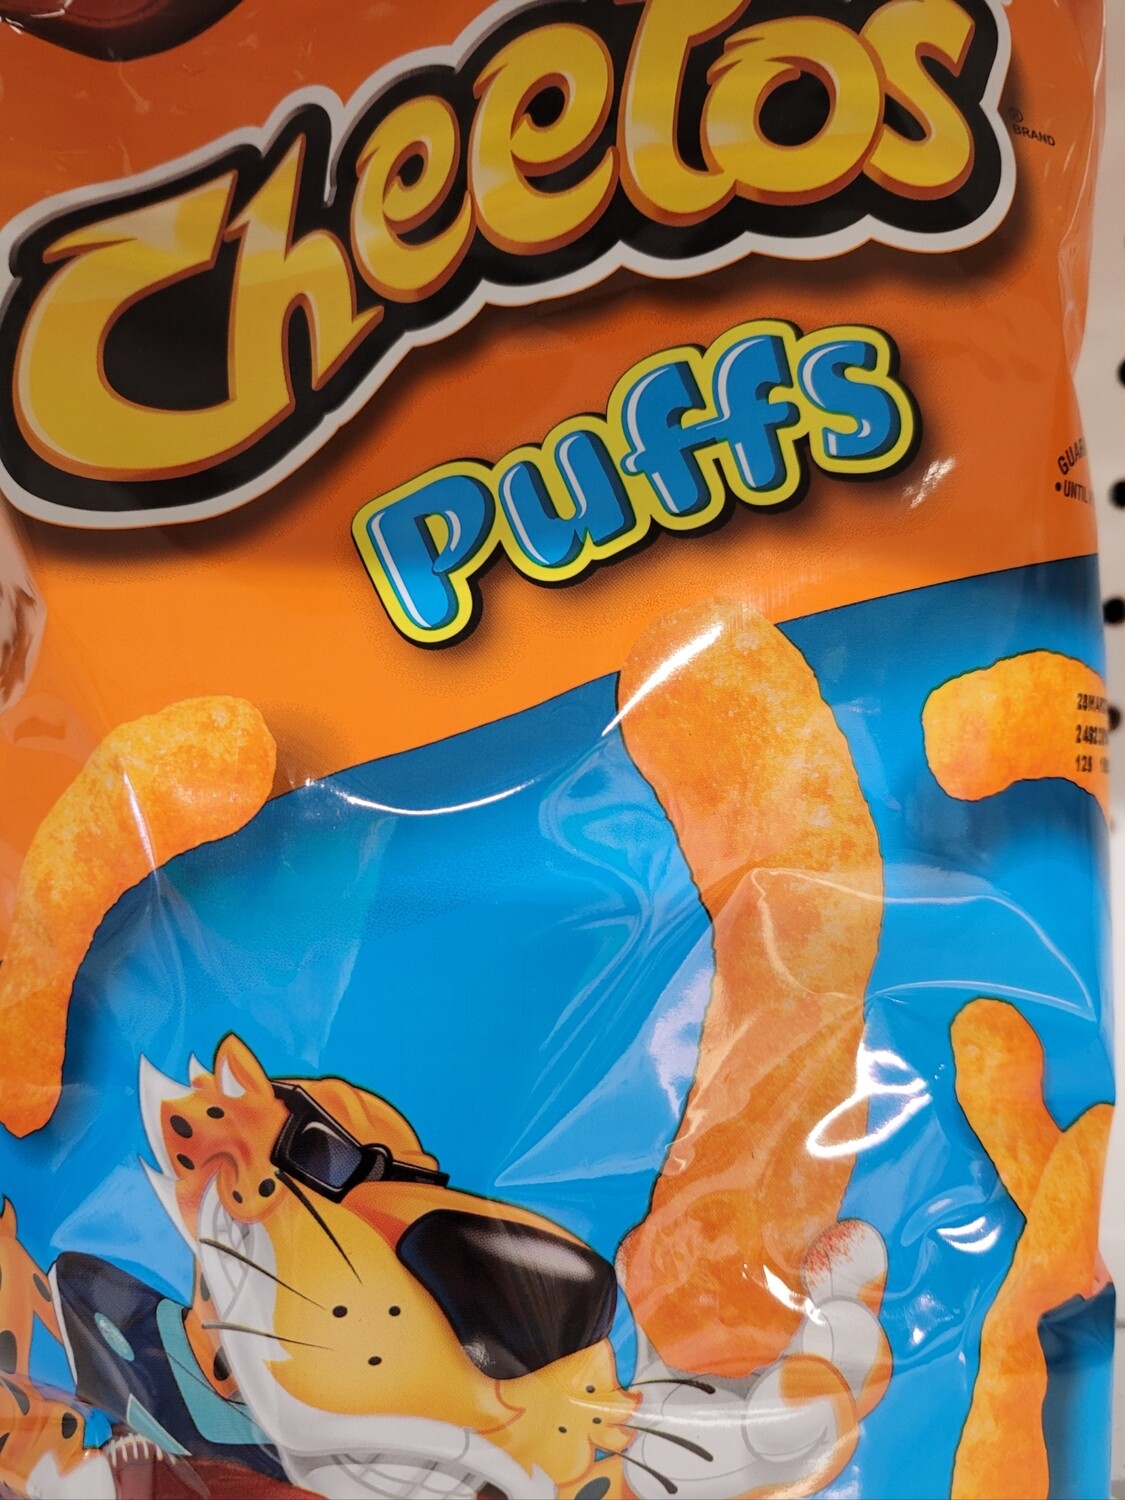 8oz Cheetos Puffs